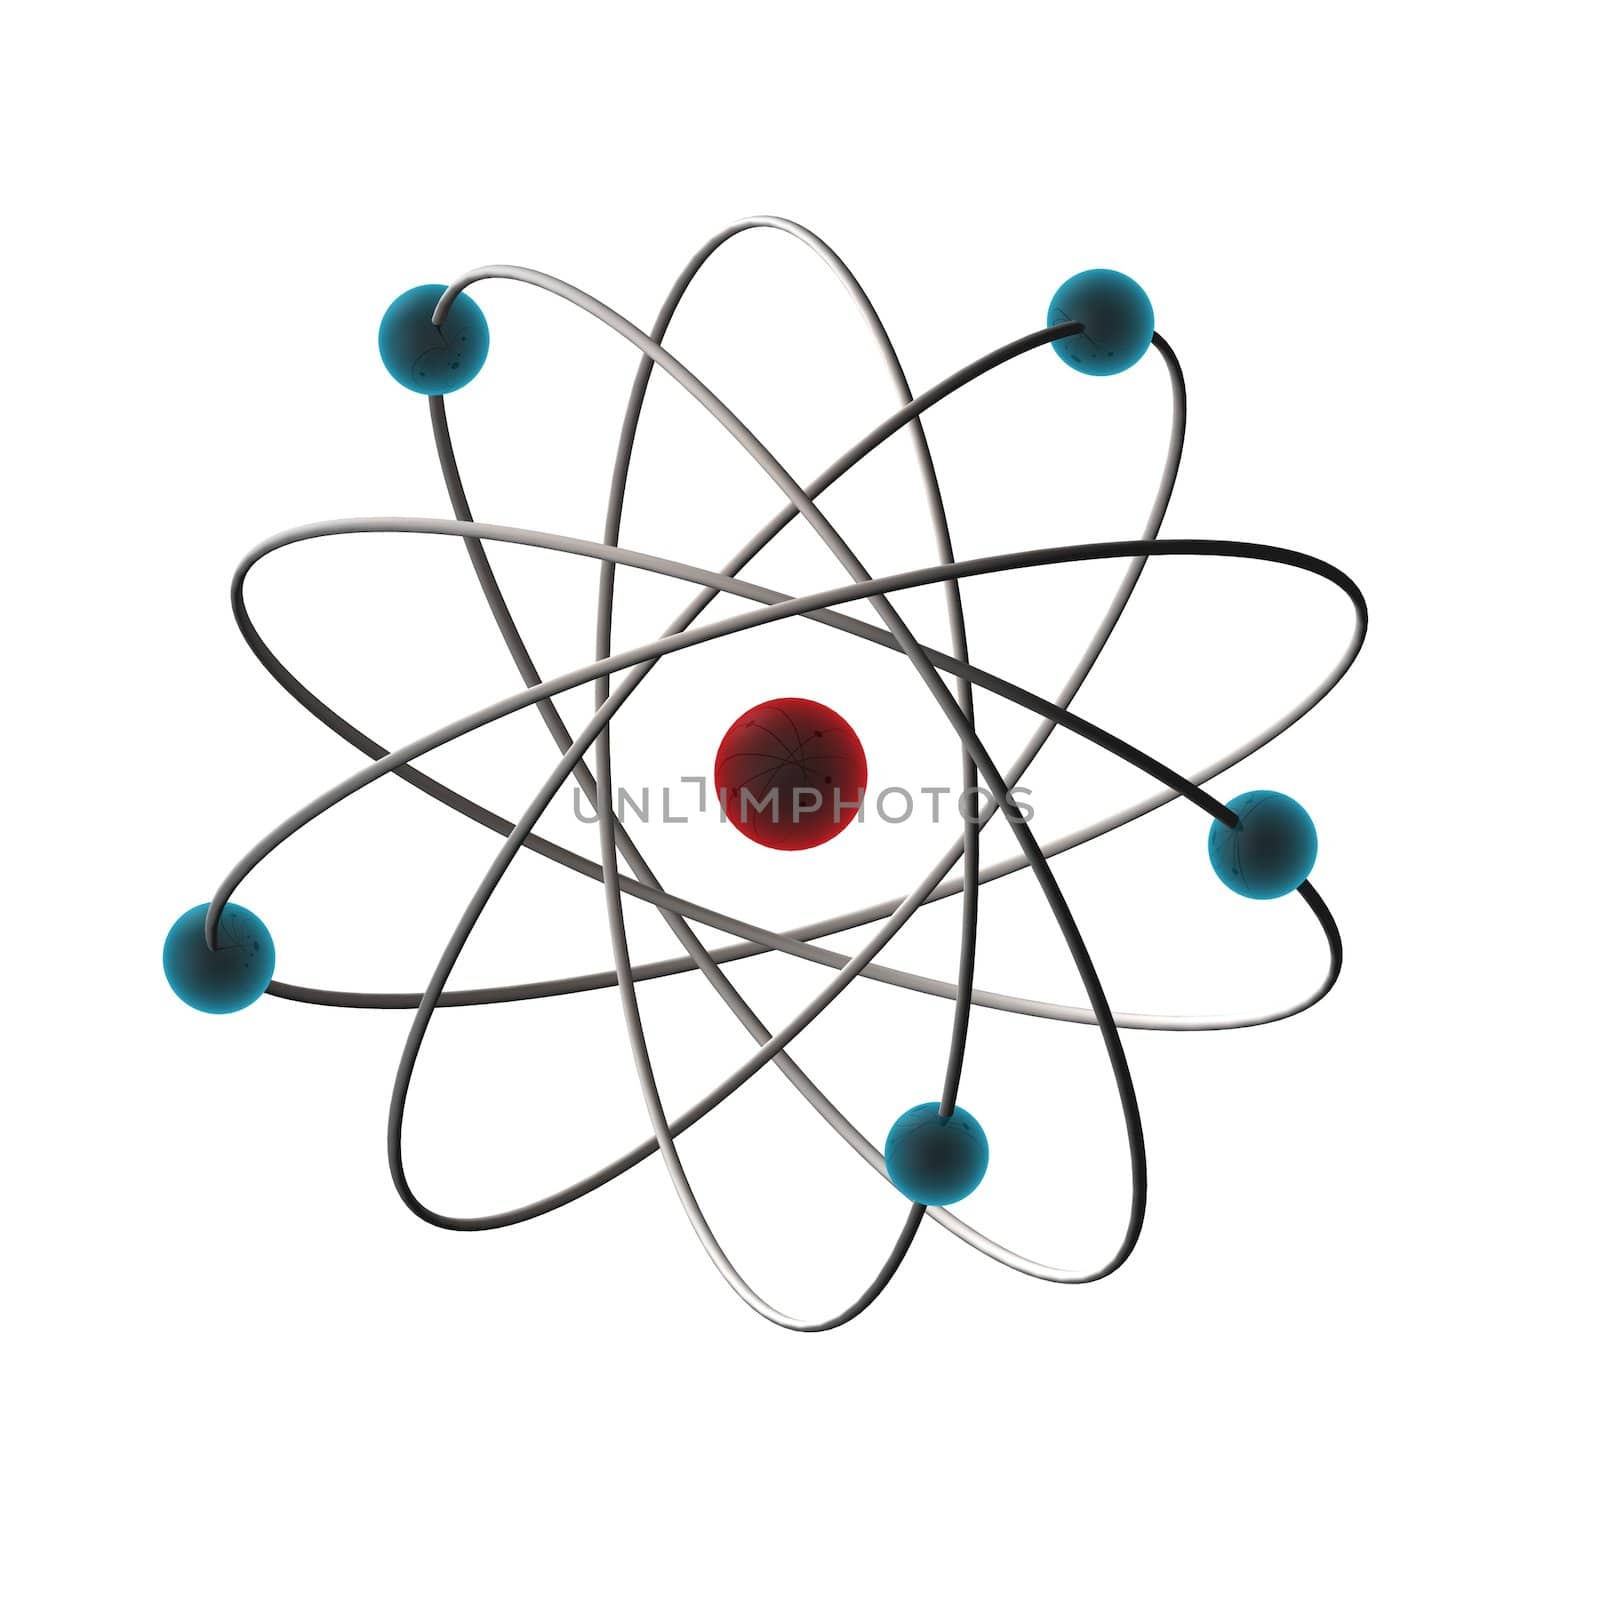 atom by darrenwhittingham